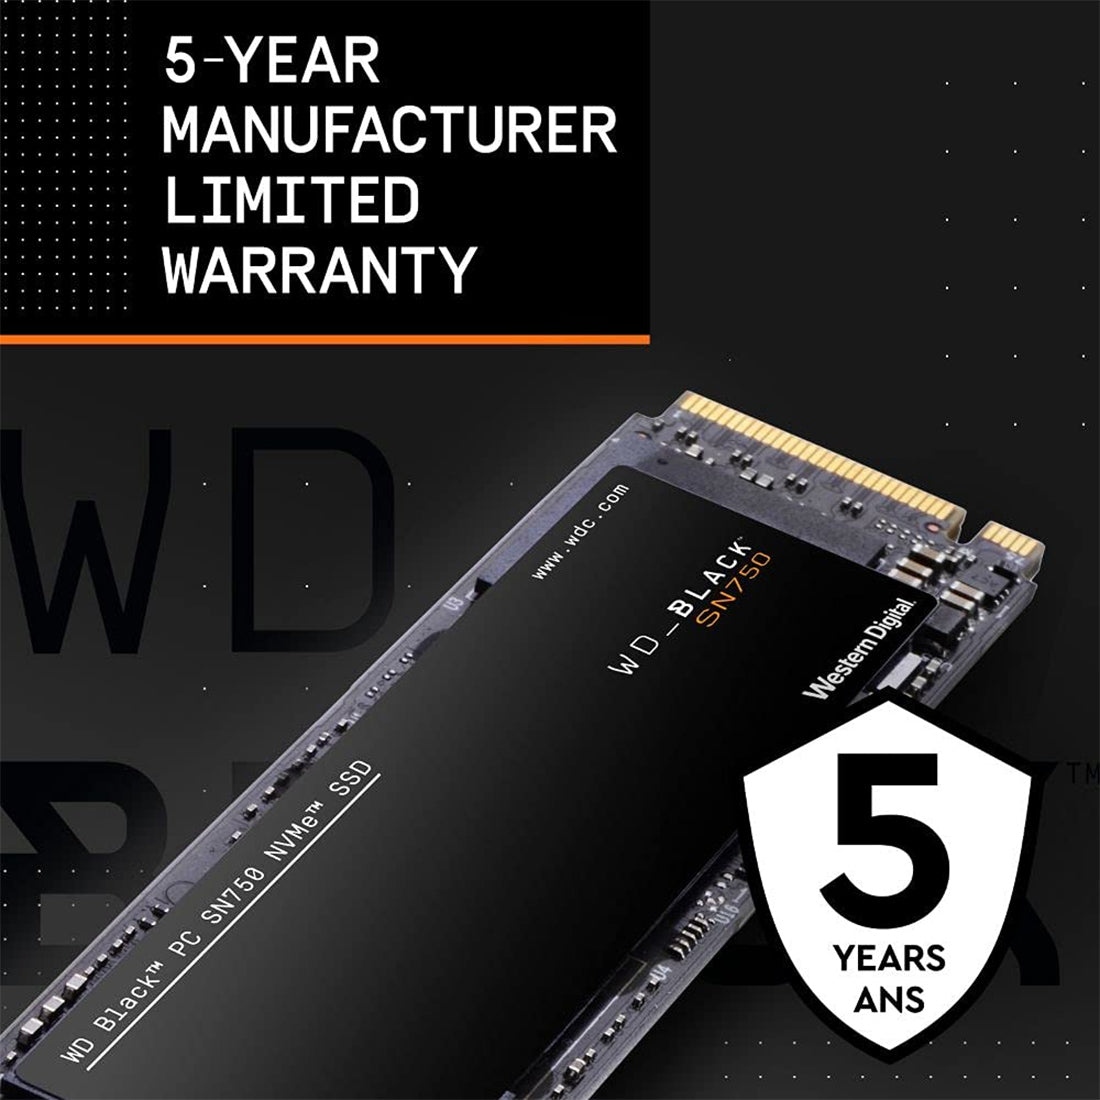 वेस्टर्न डिजिटल WD ब्लैक SN750 250GB M.2 2280 PCIe NVMe इंटरनल SSD